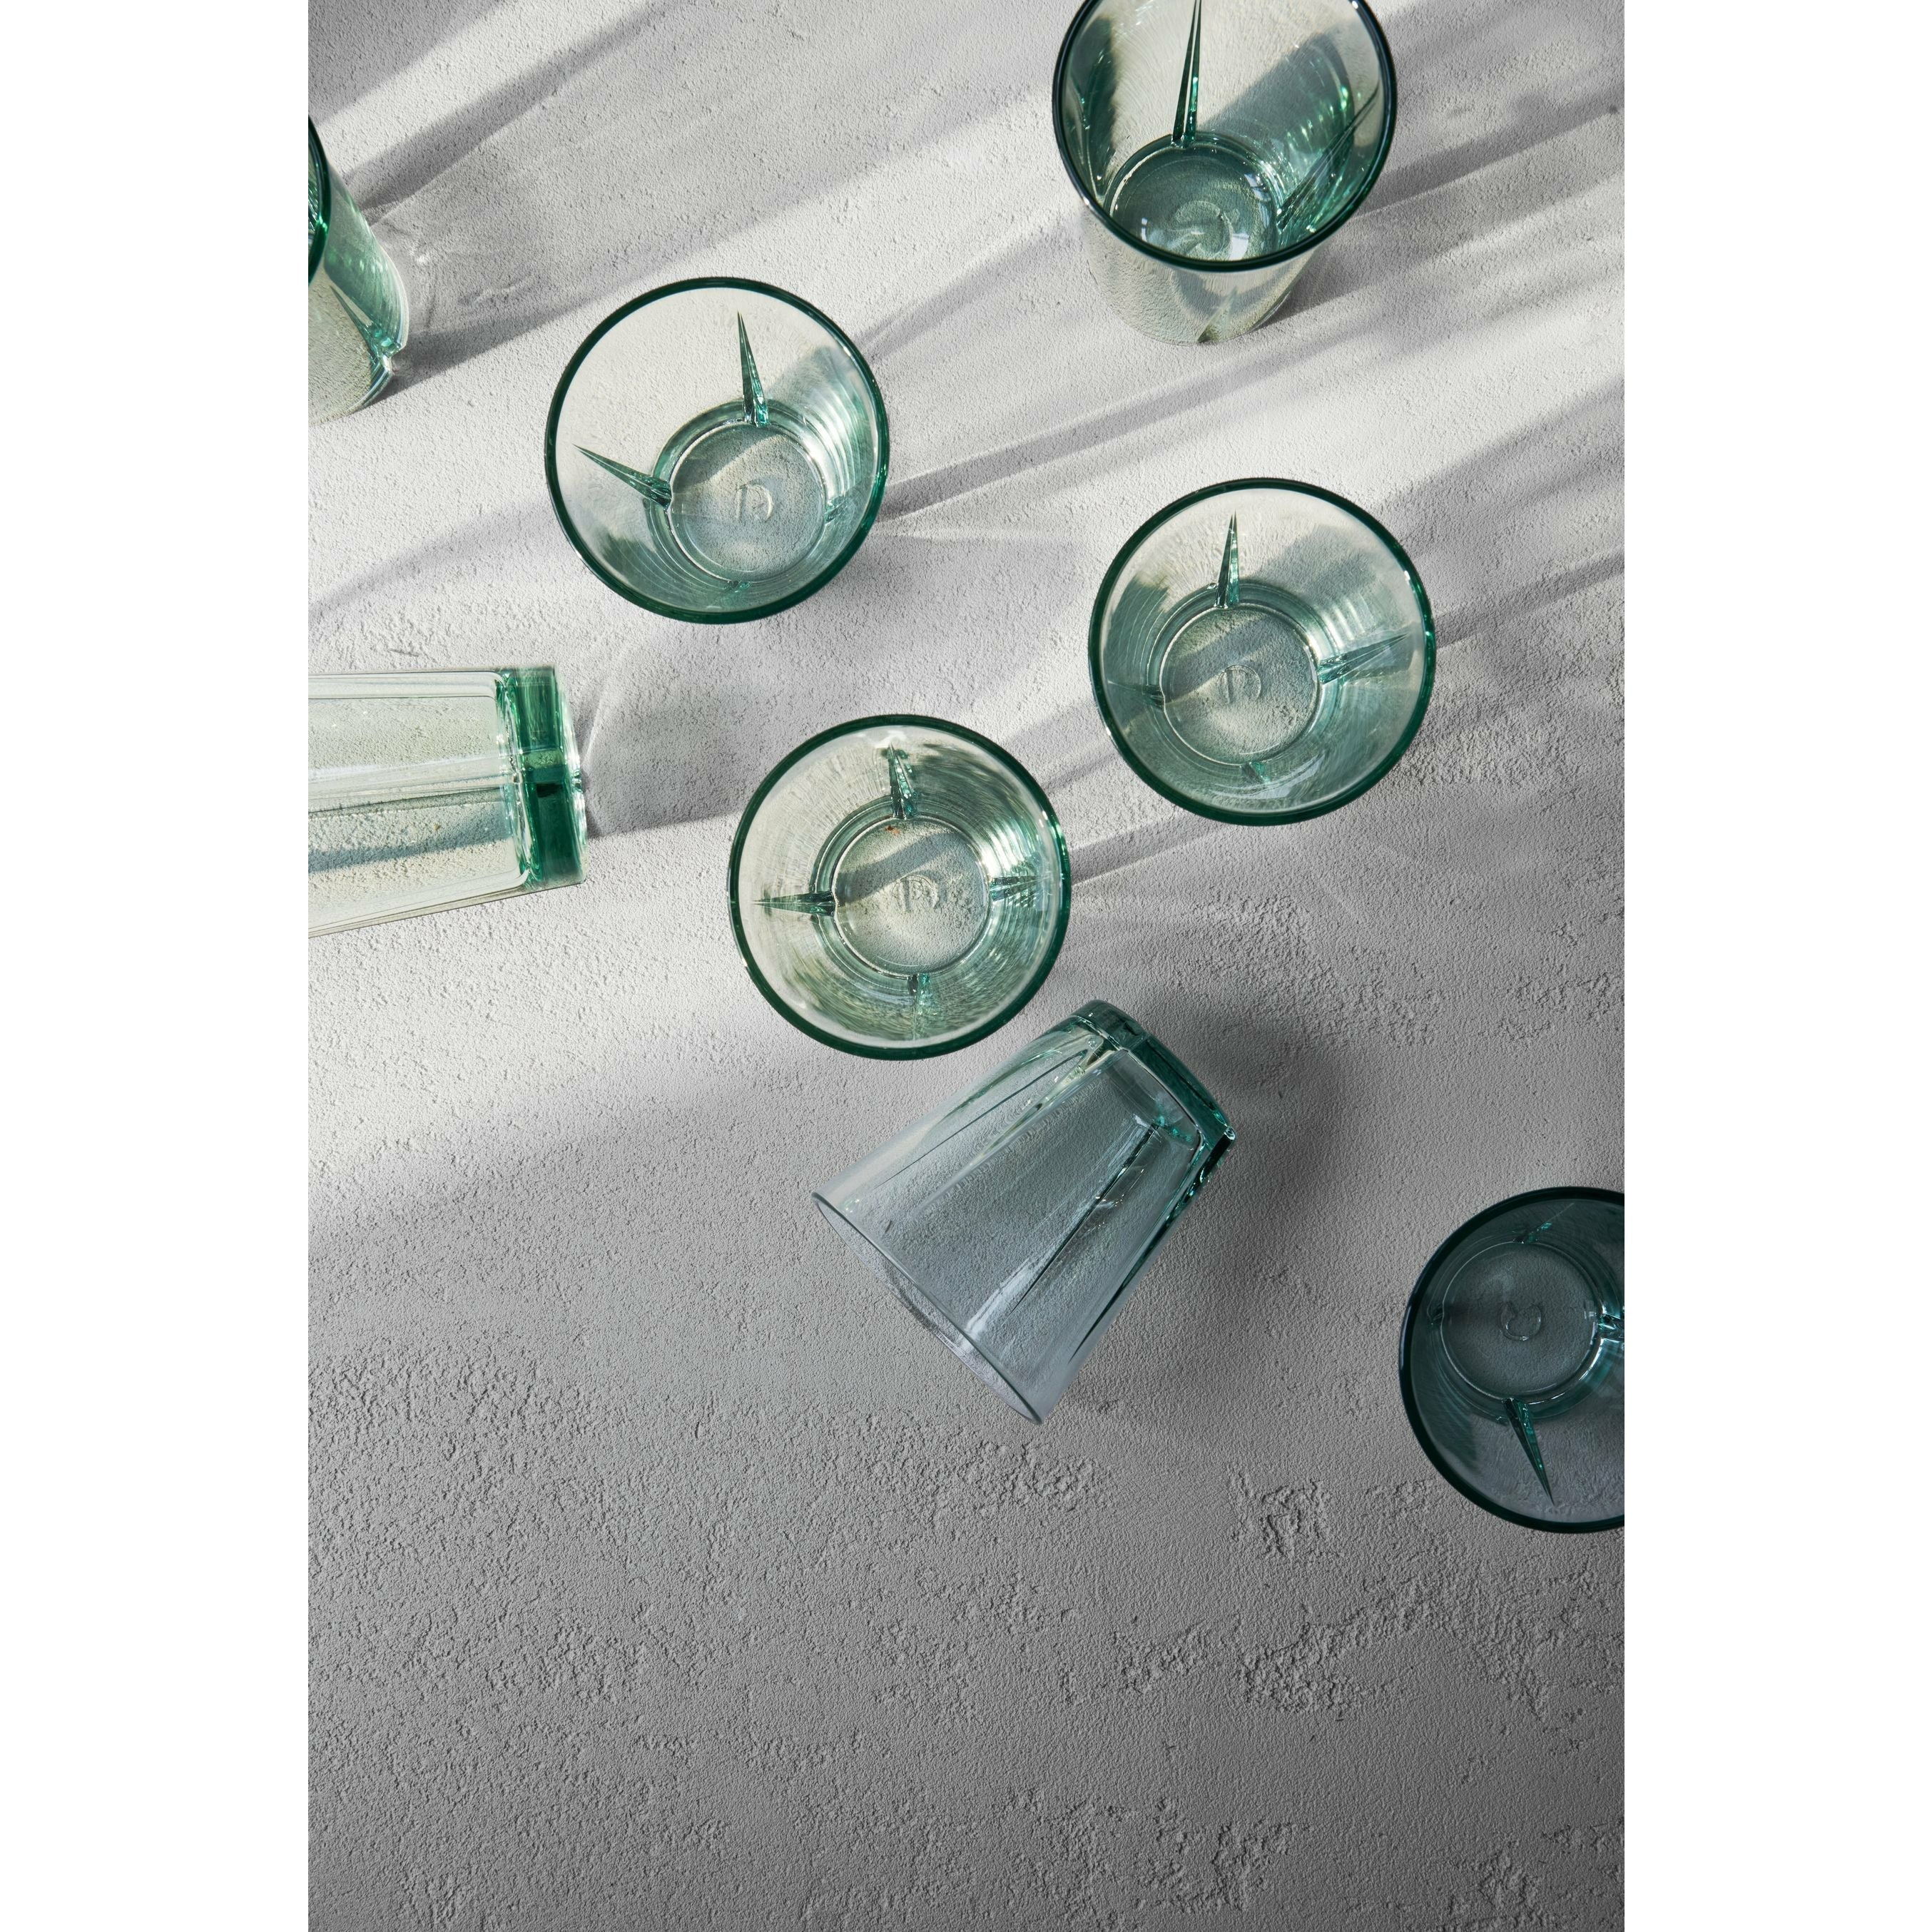 Rosendahl Grand Cru饮水玻璃回收玻璃26 Cl，4台。